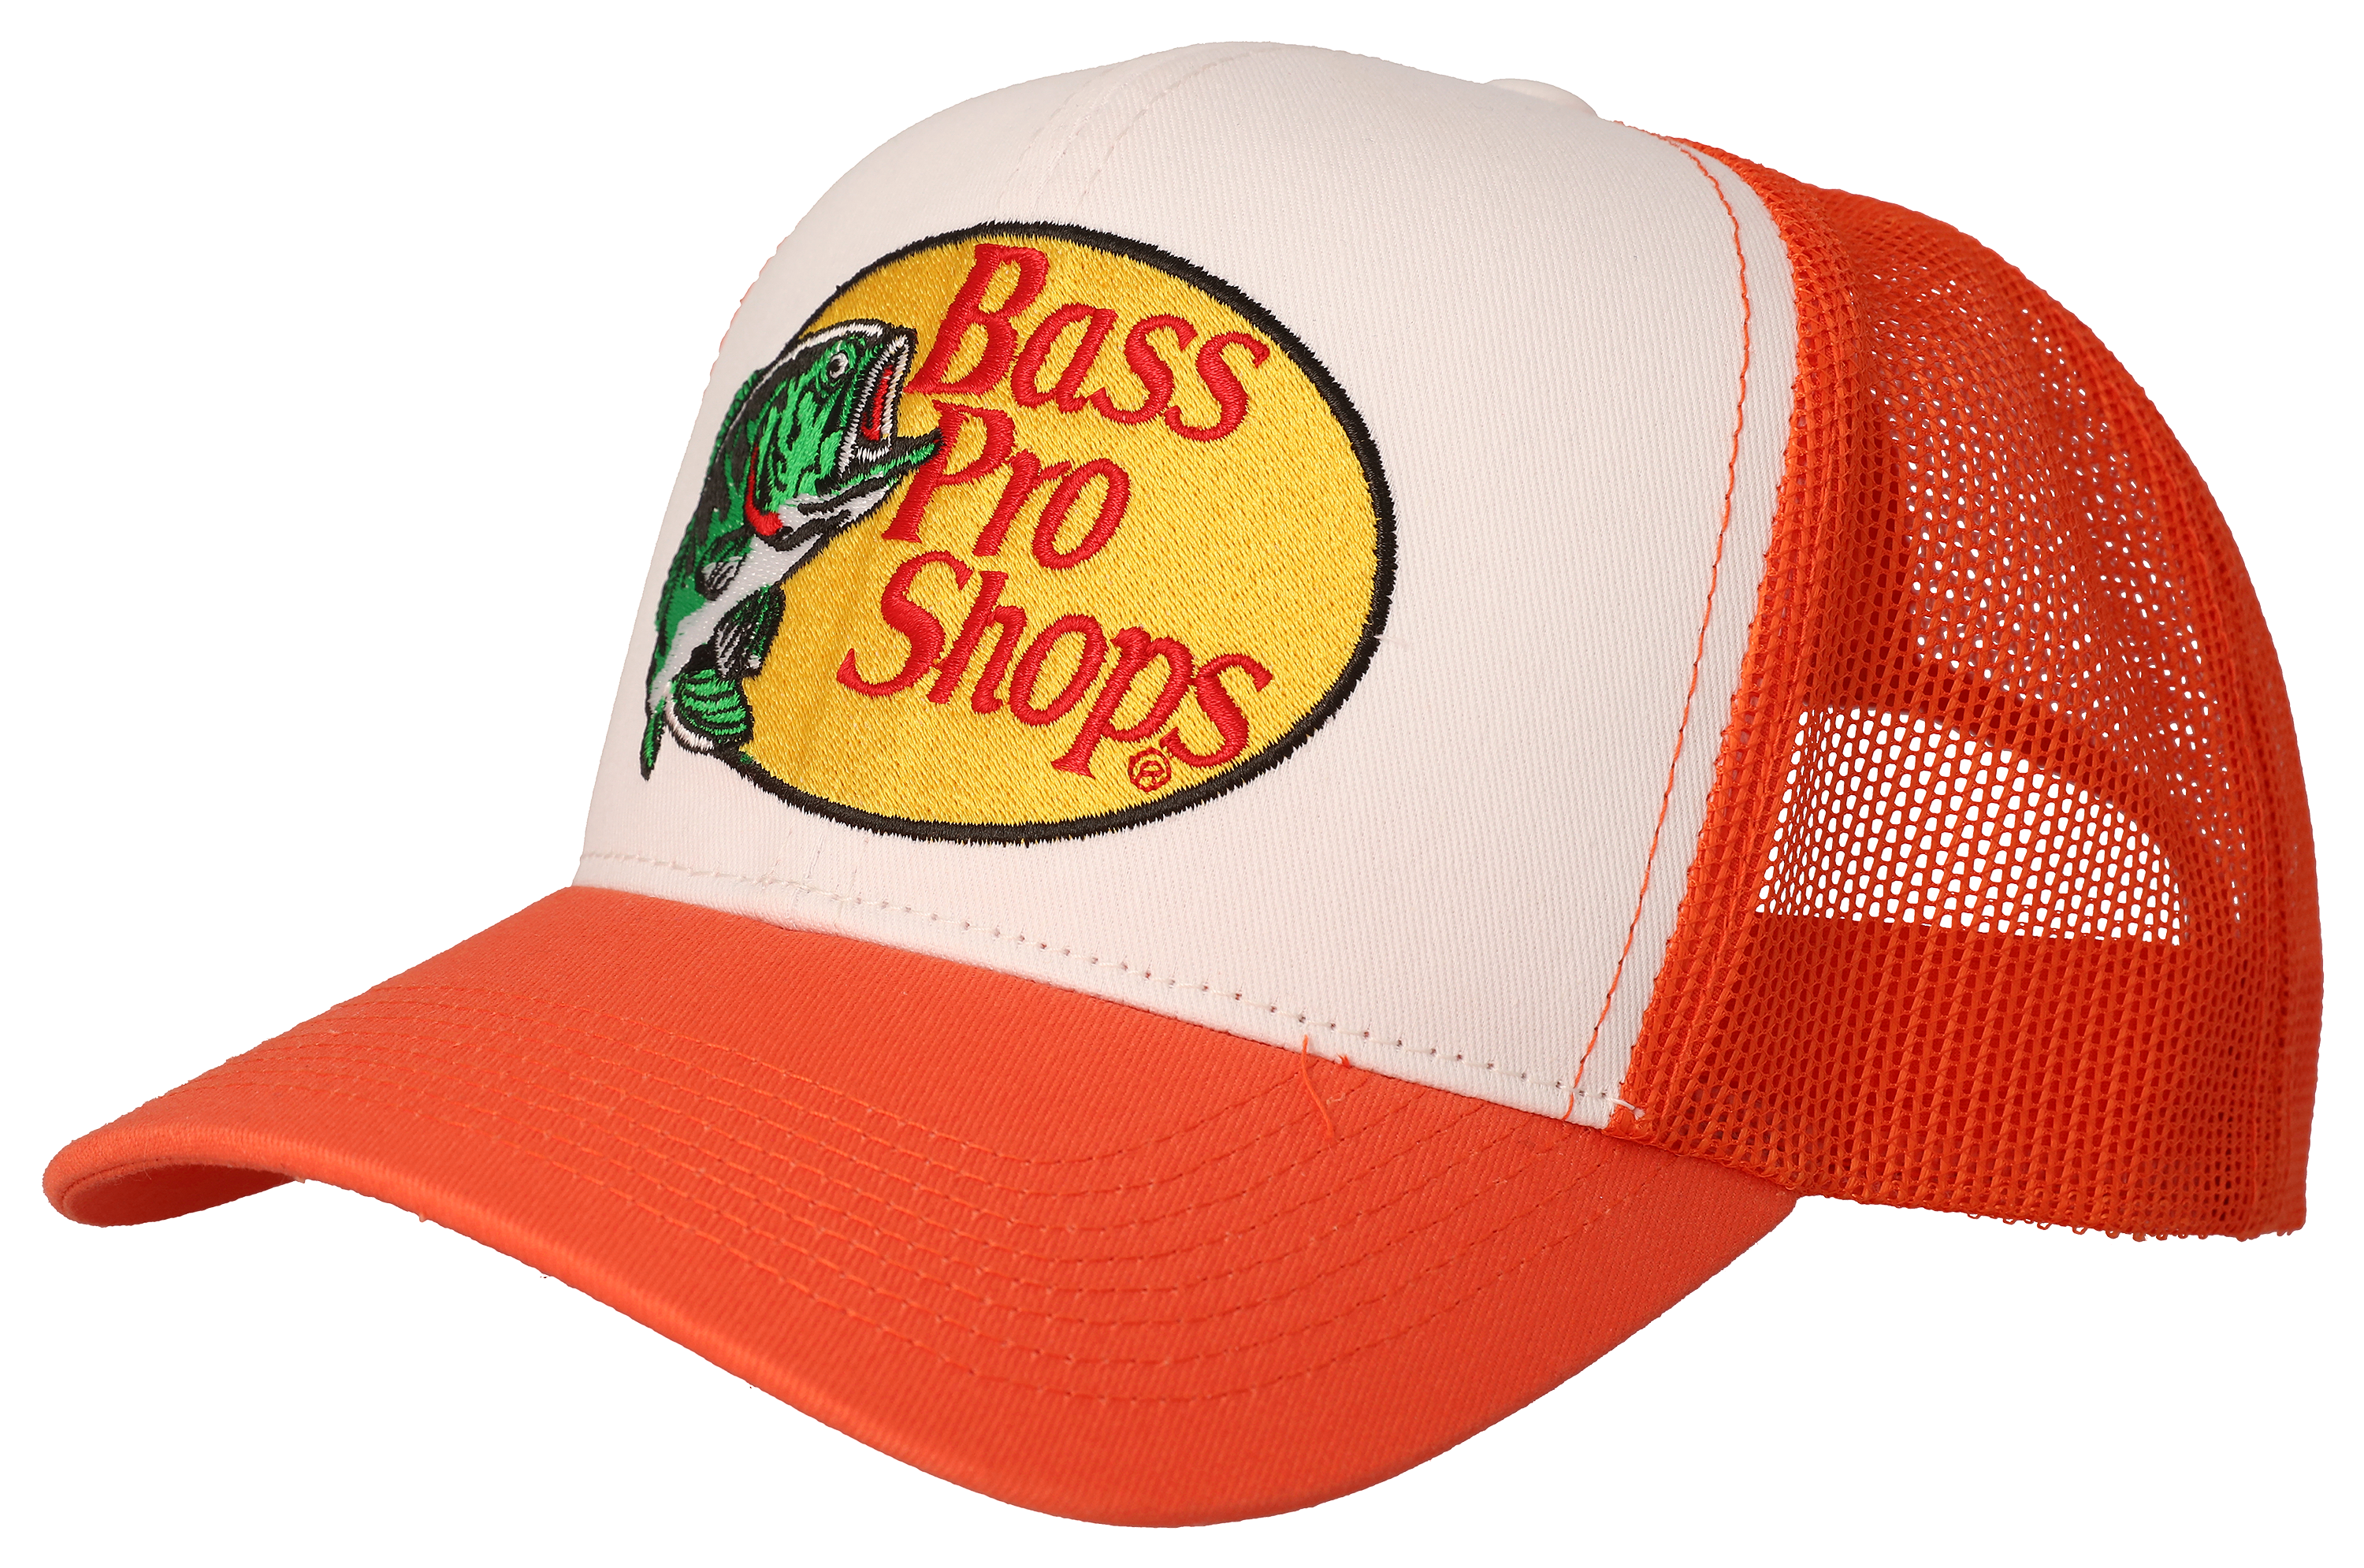 Vintage Bass Pro Shops Hat Beige Cap SnapBack Trucker Fishing Fish